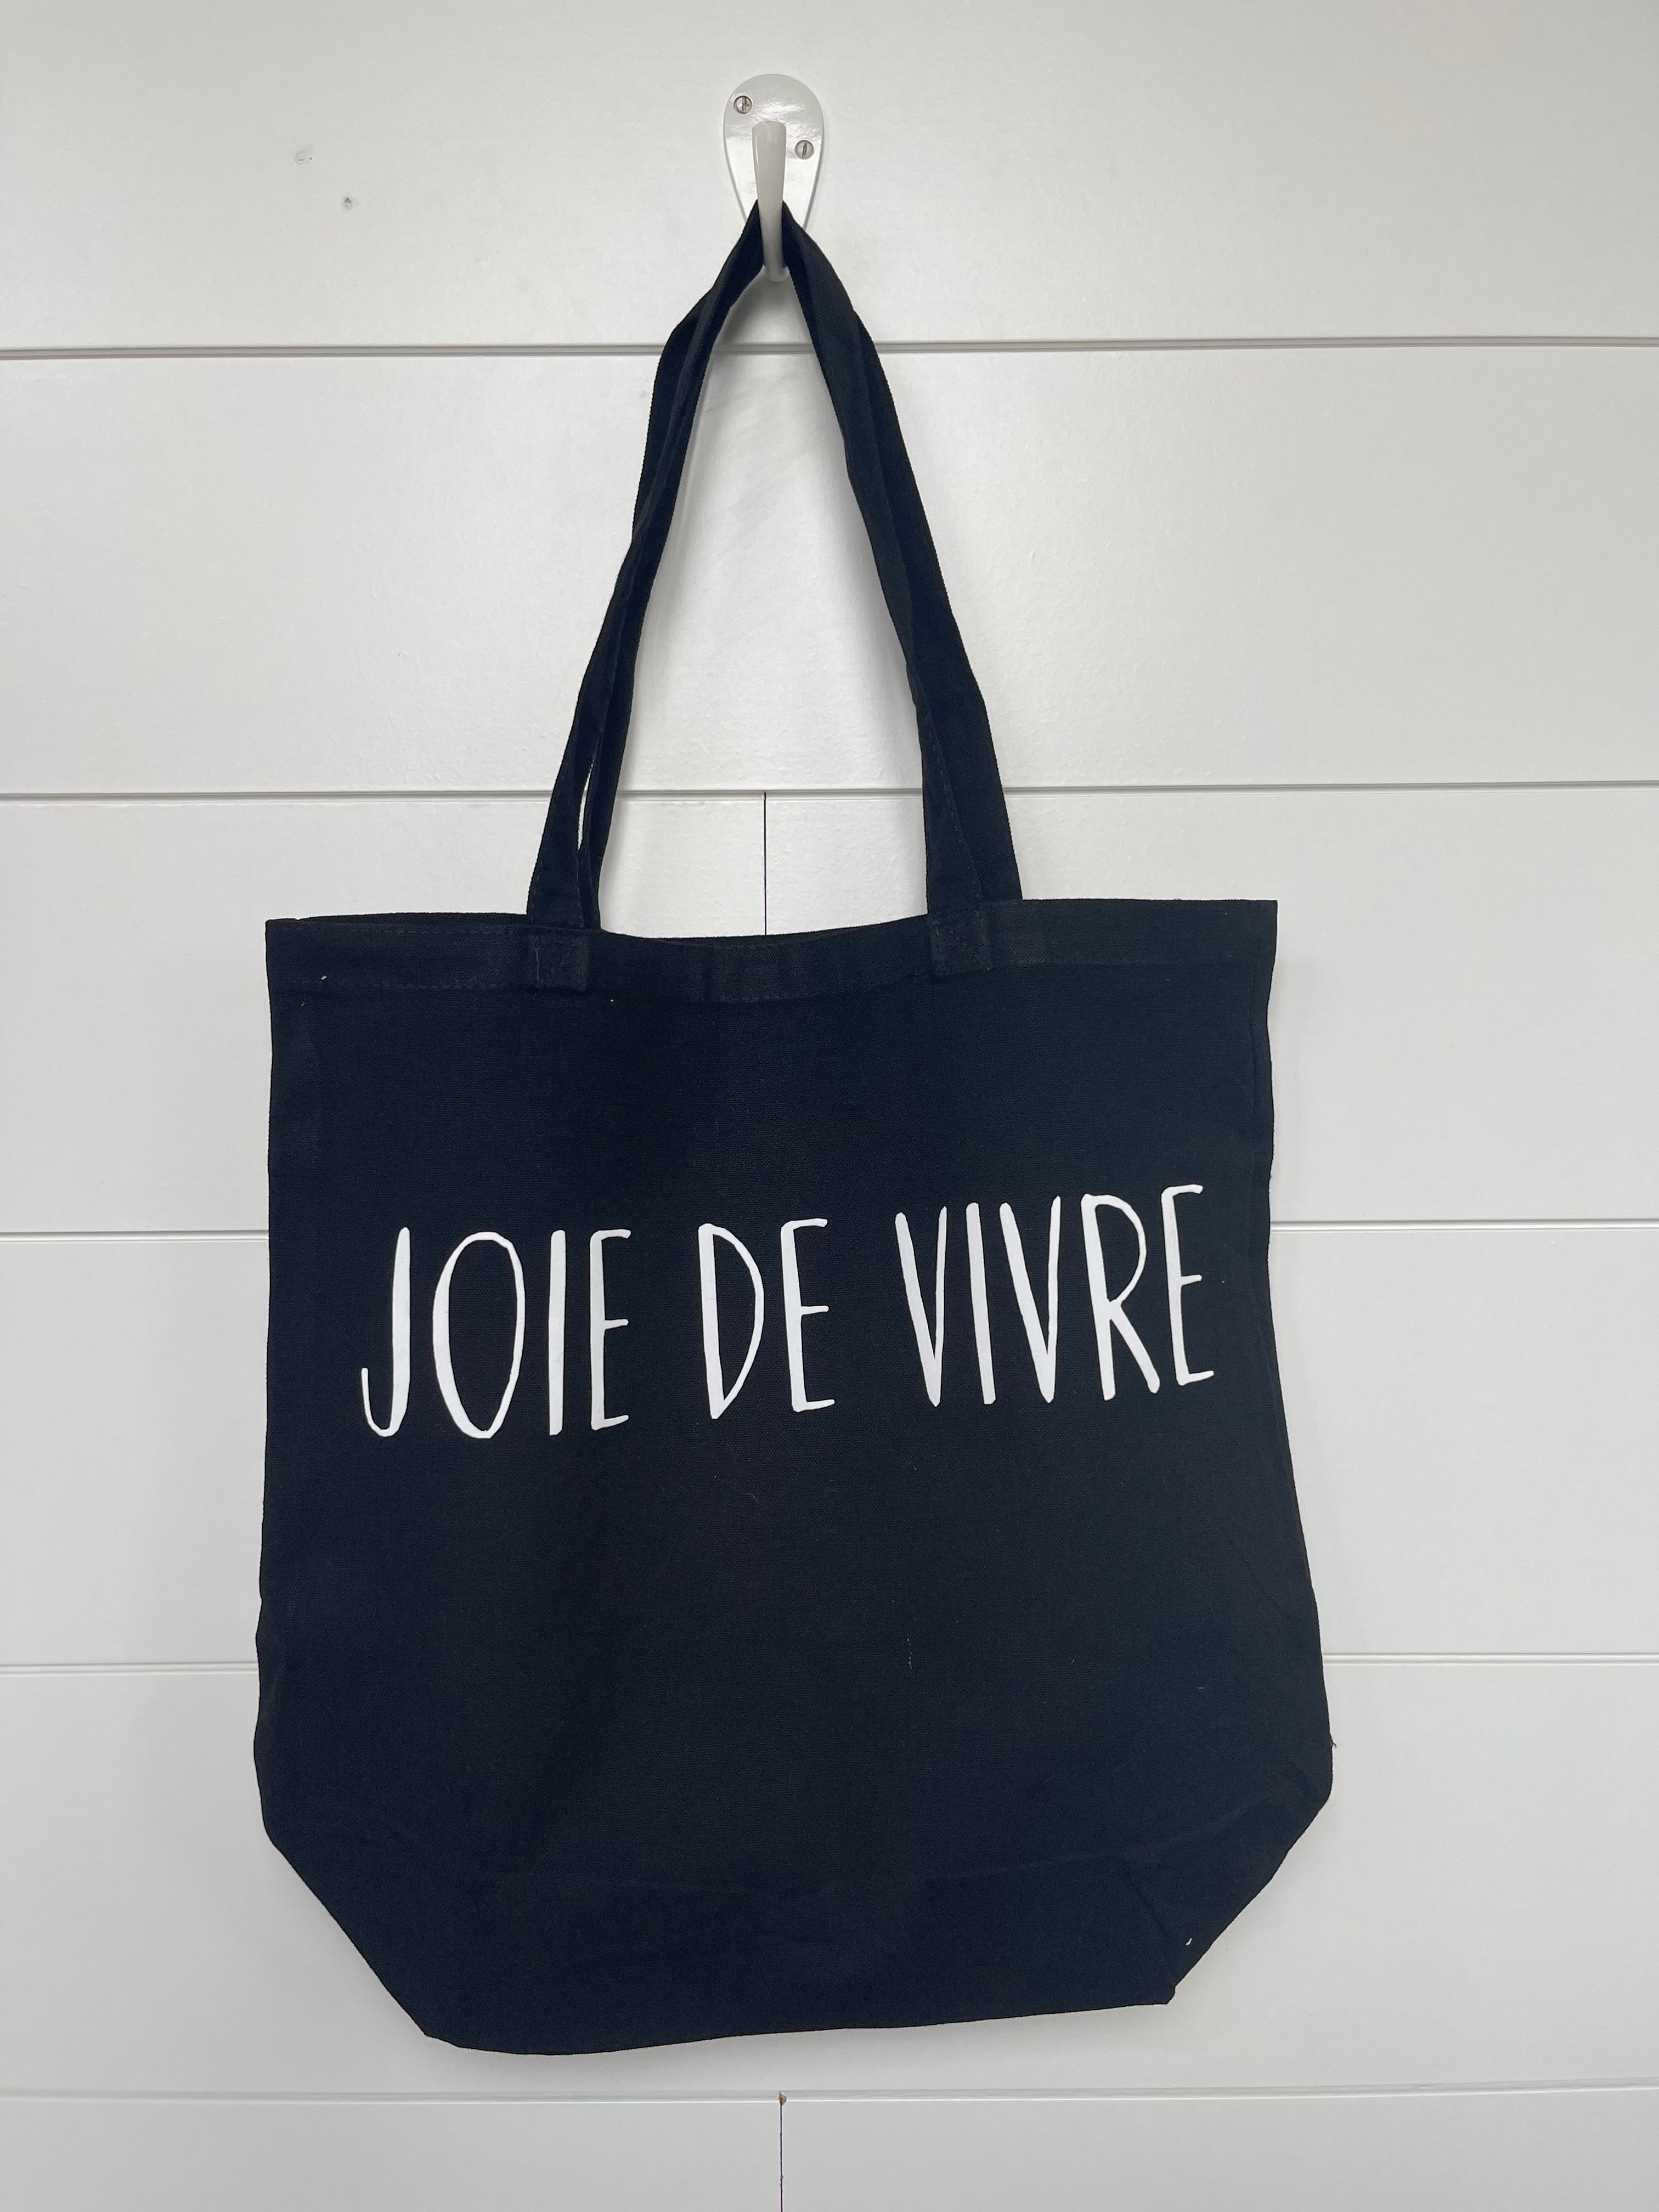 Joie de vivre Black Tote Bag “joy of living”